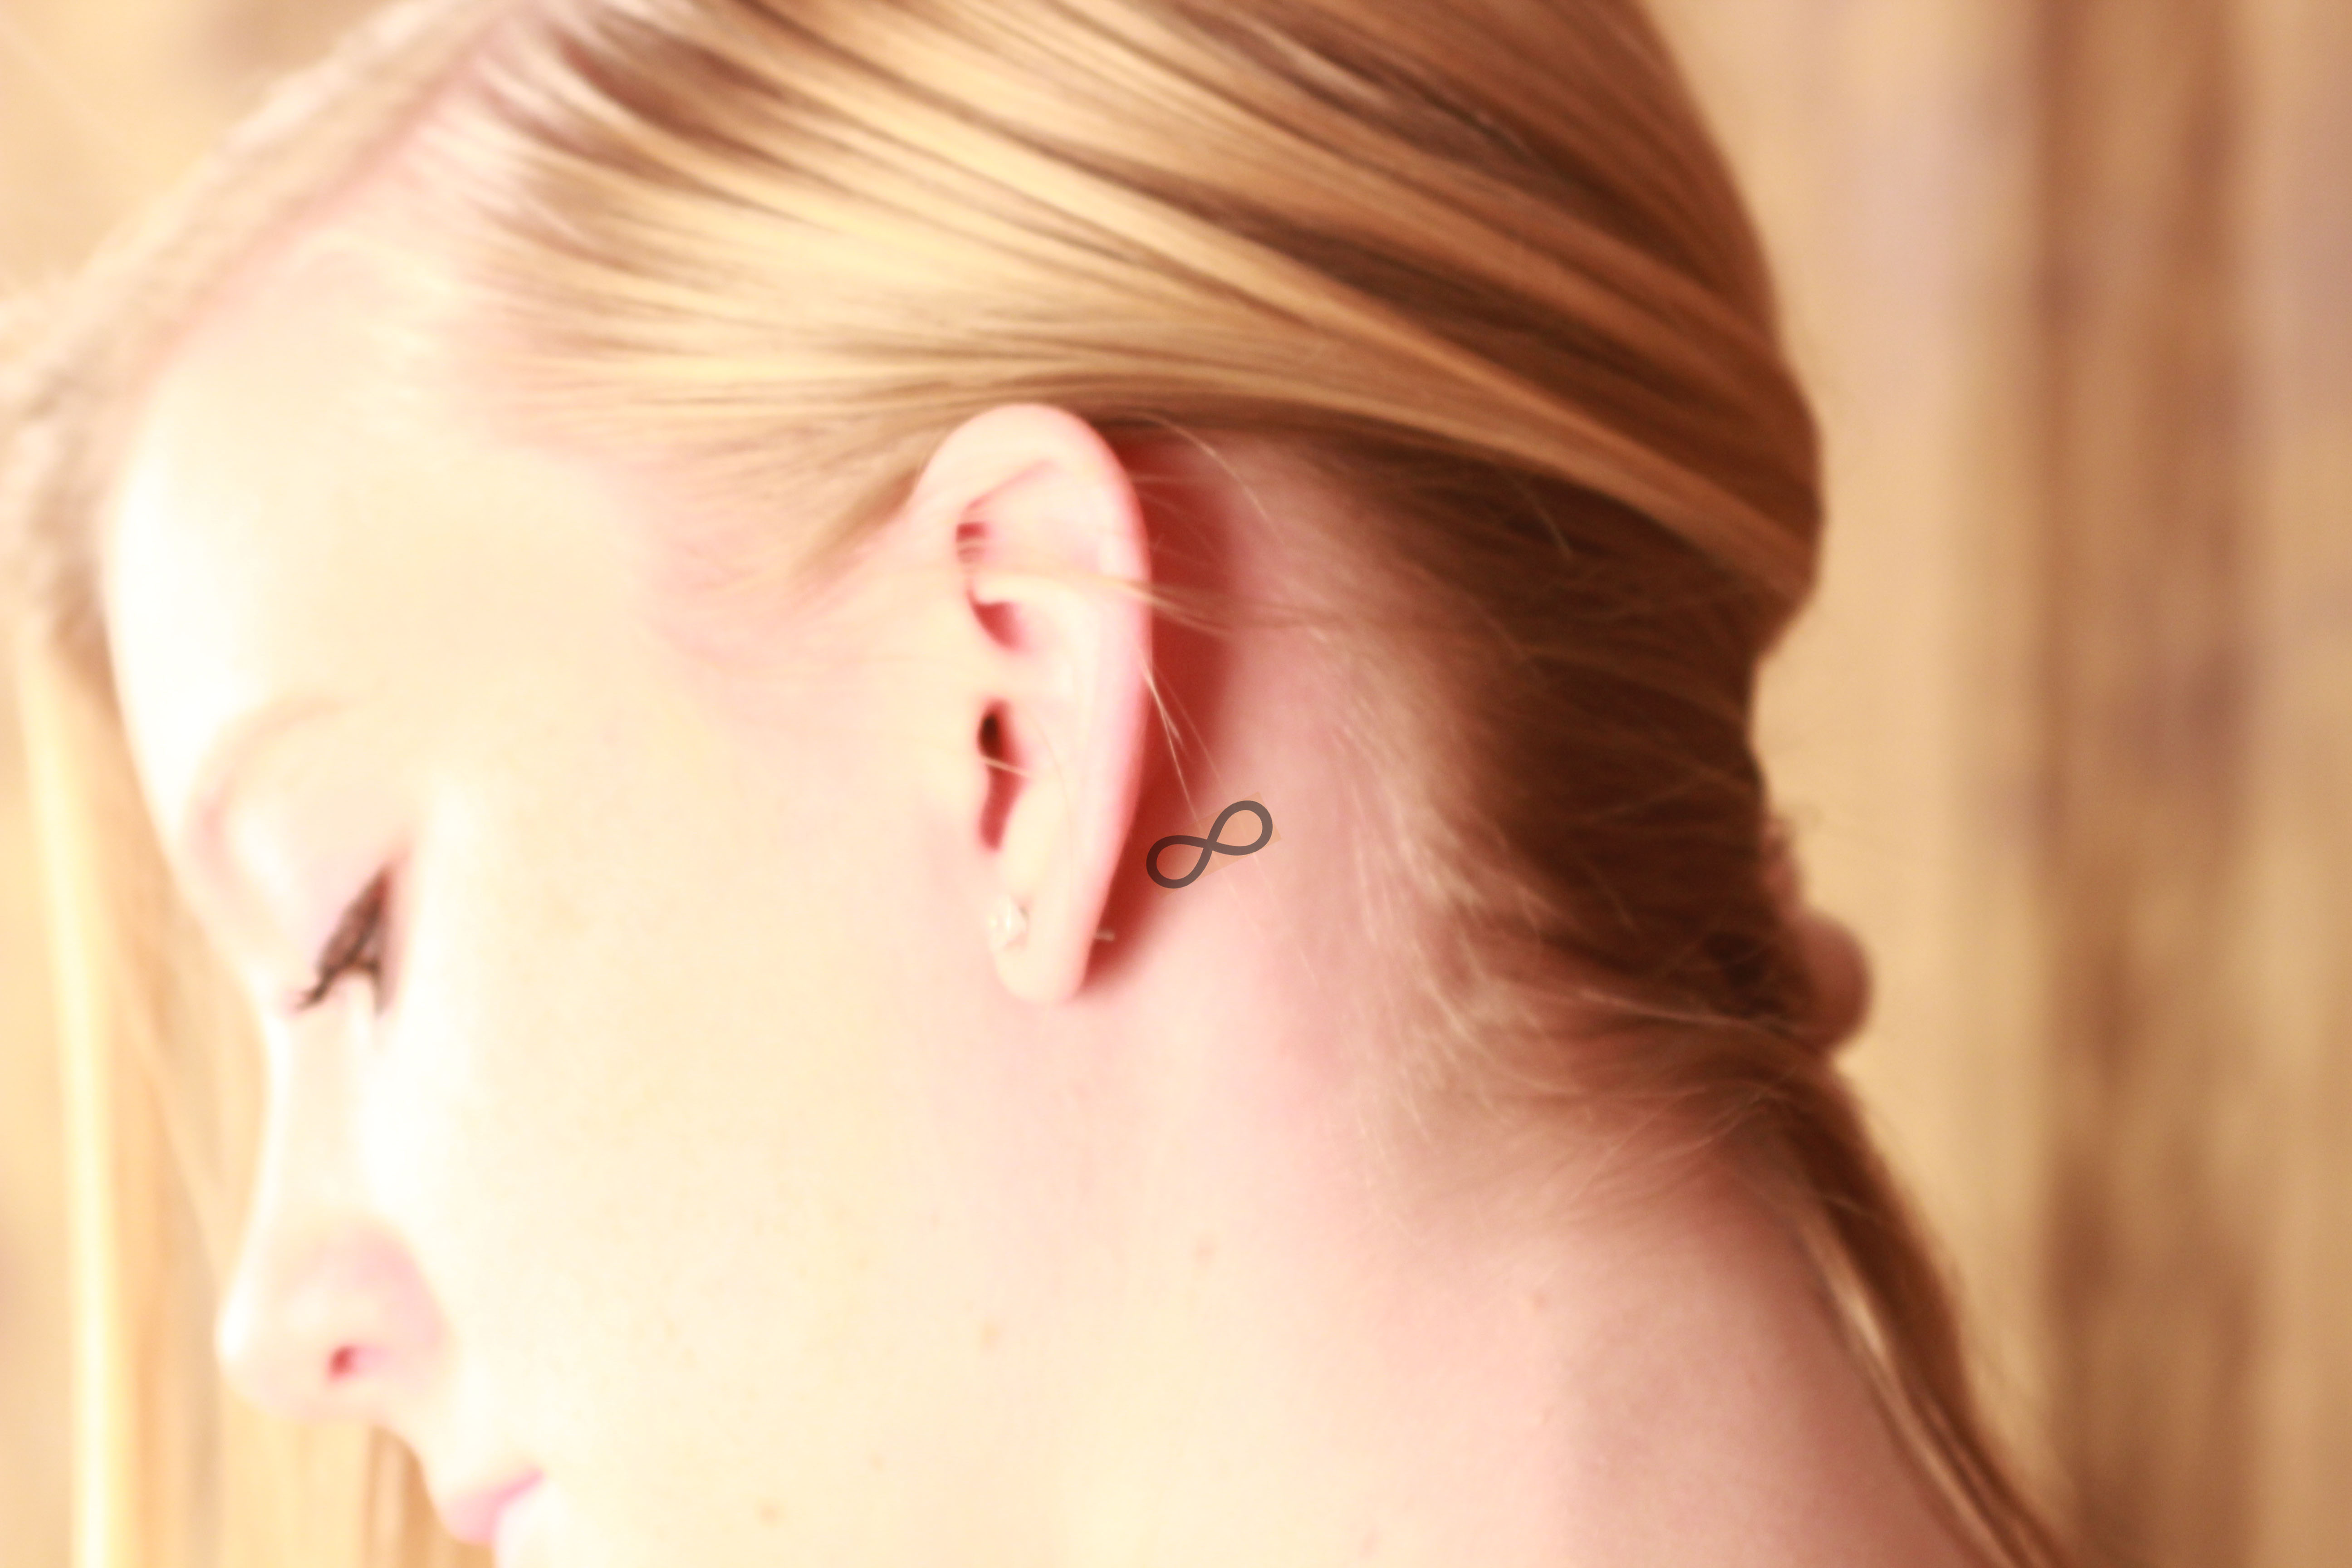  infinity tattoo behind ear